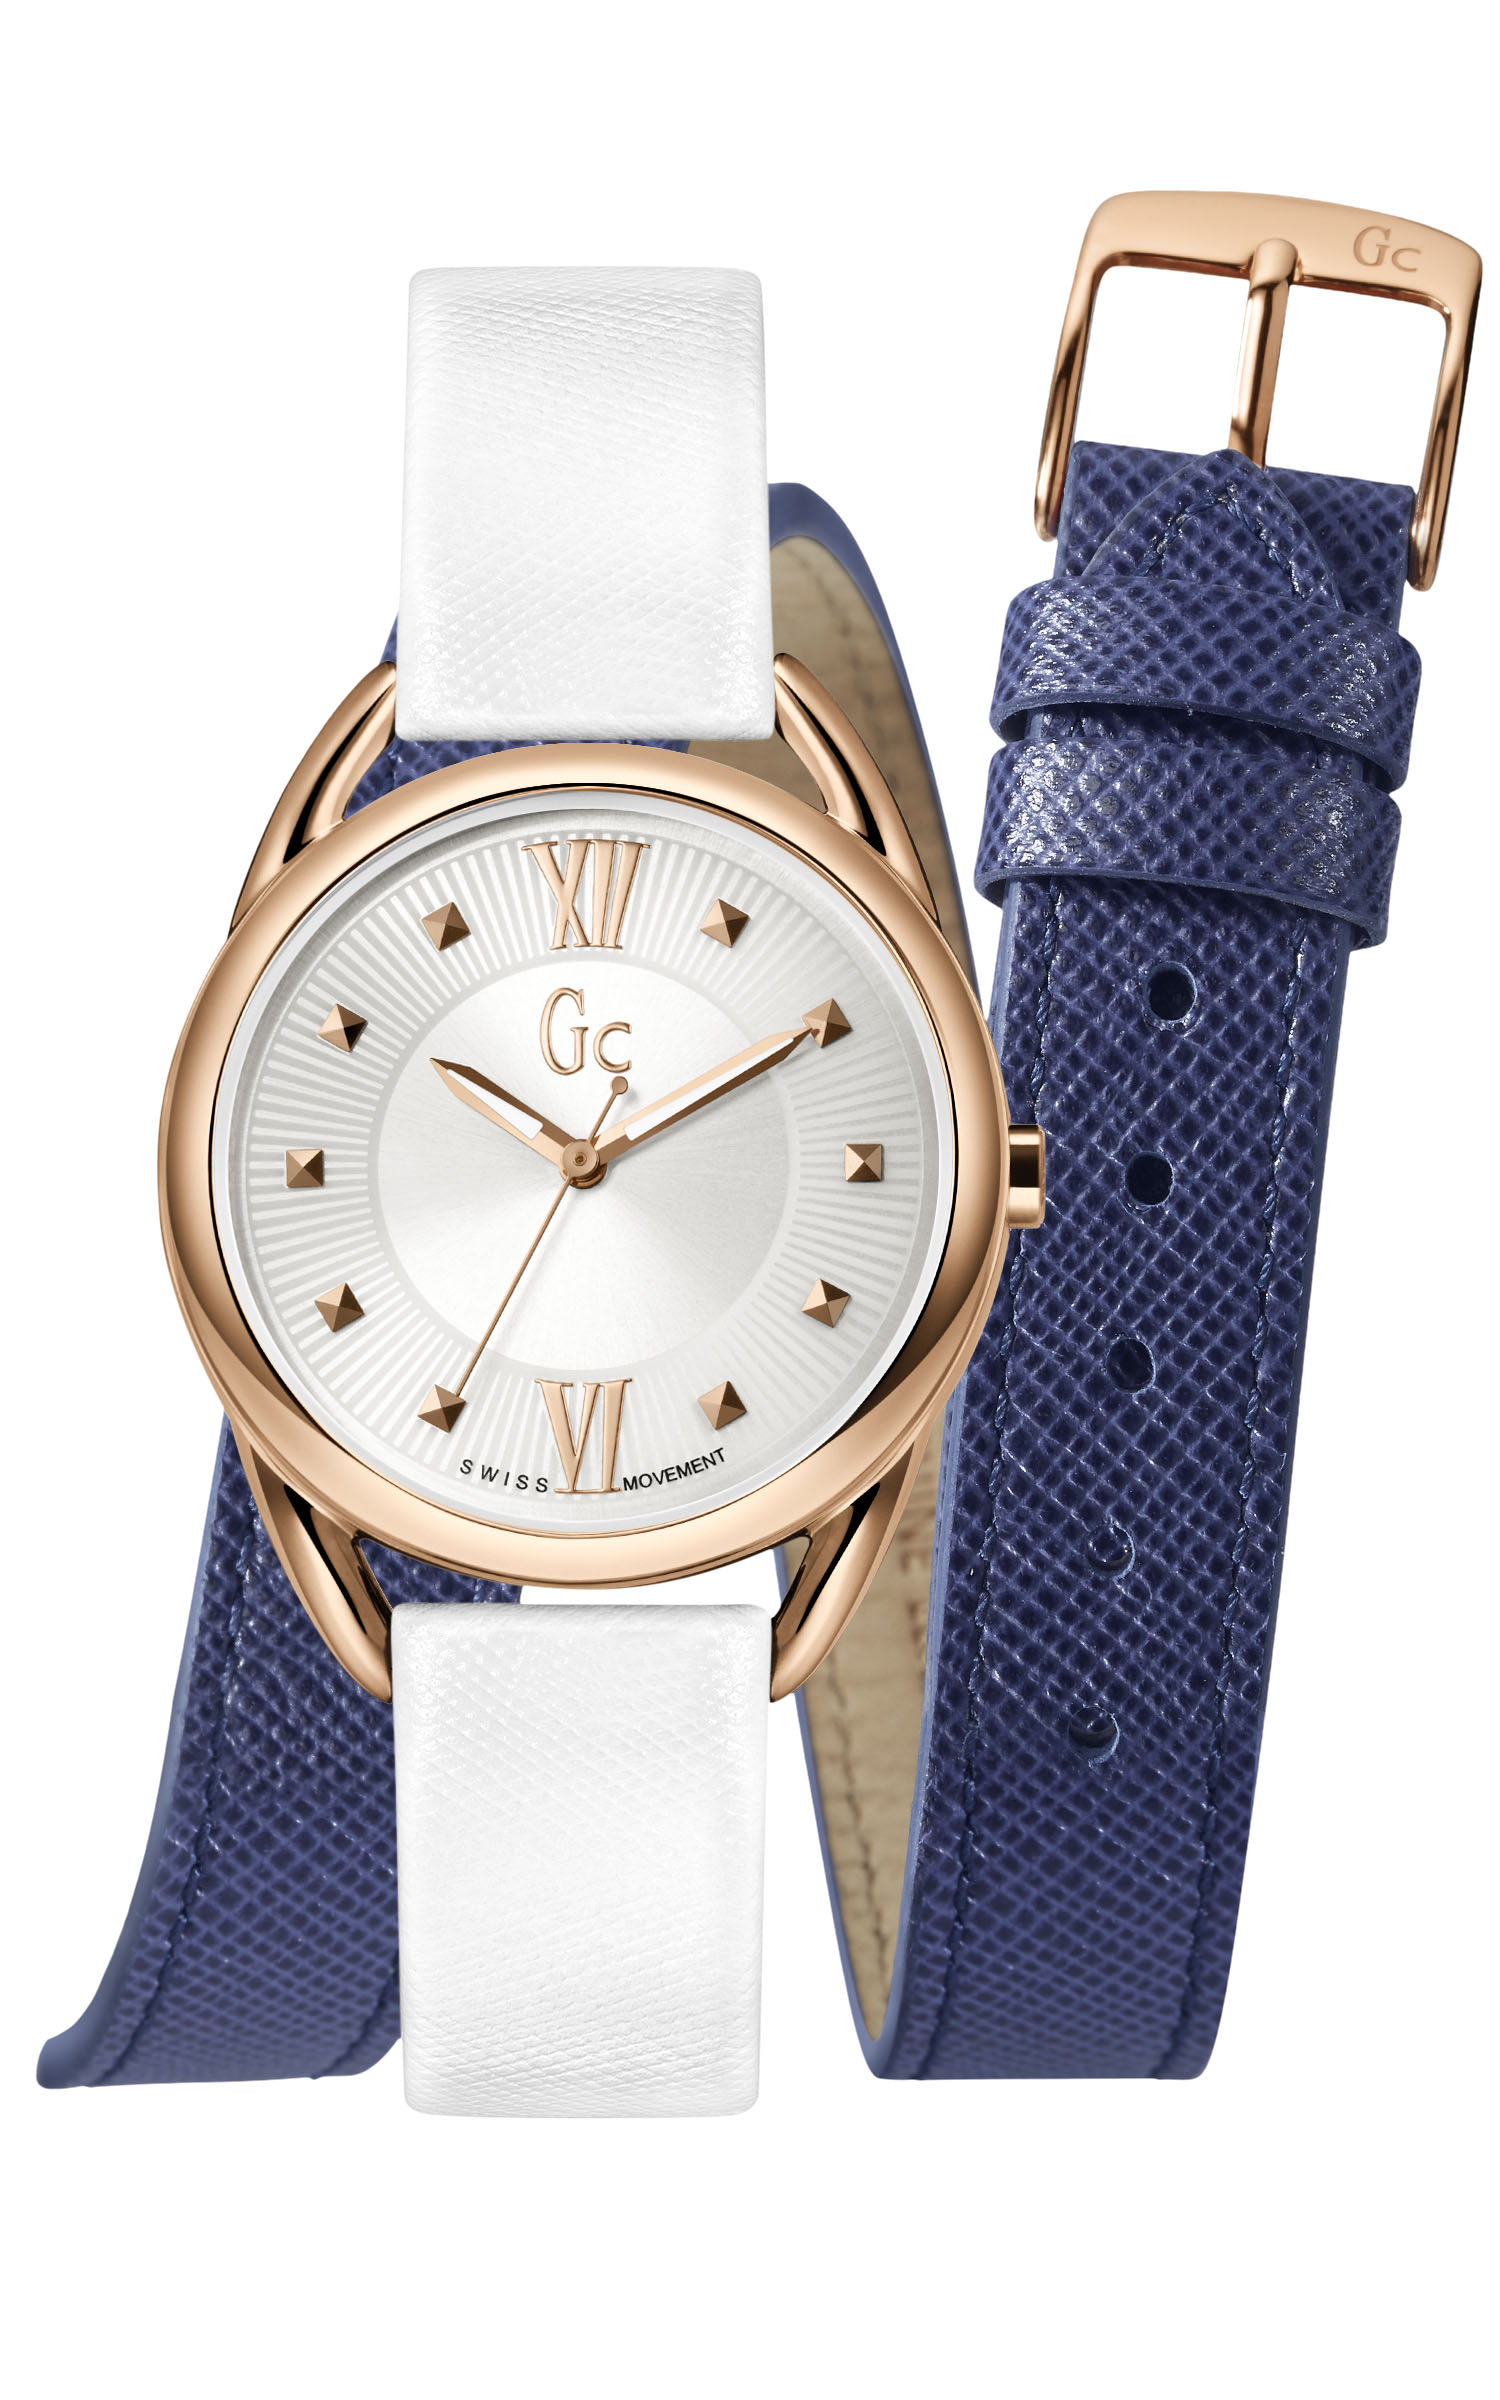 Reloj GC Smart Luxury Swiss Movement